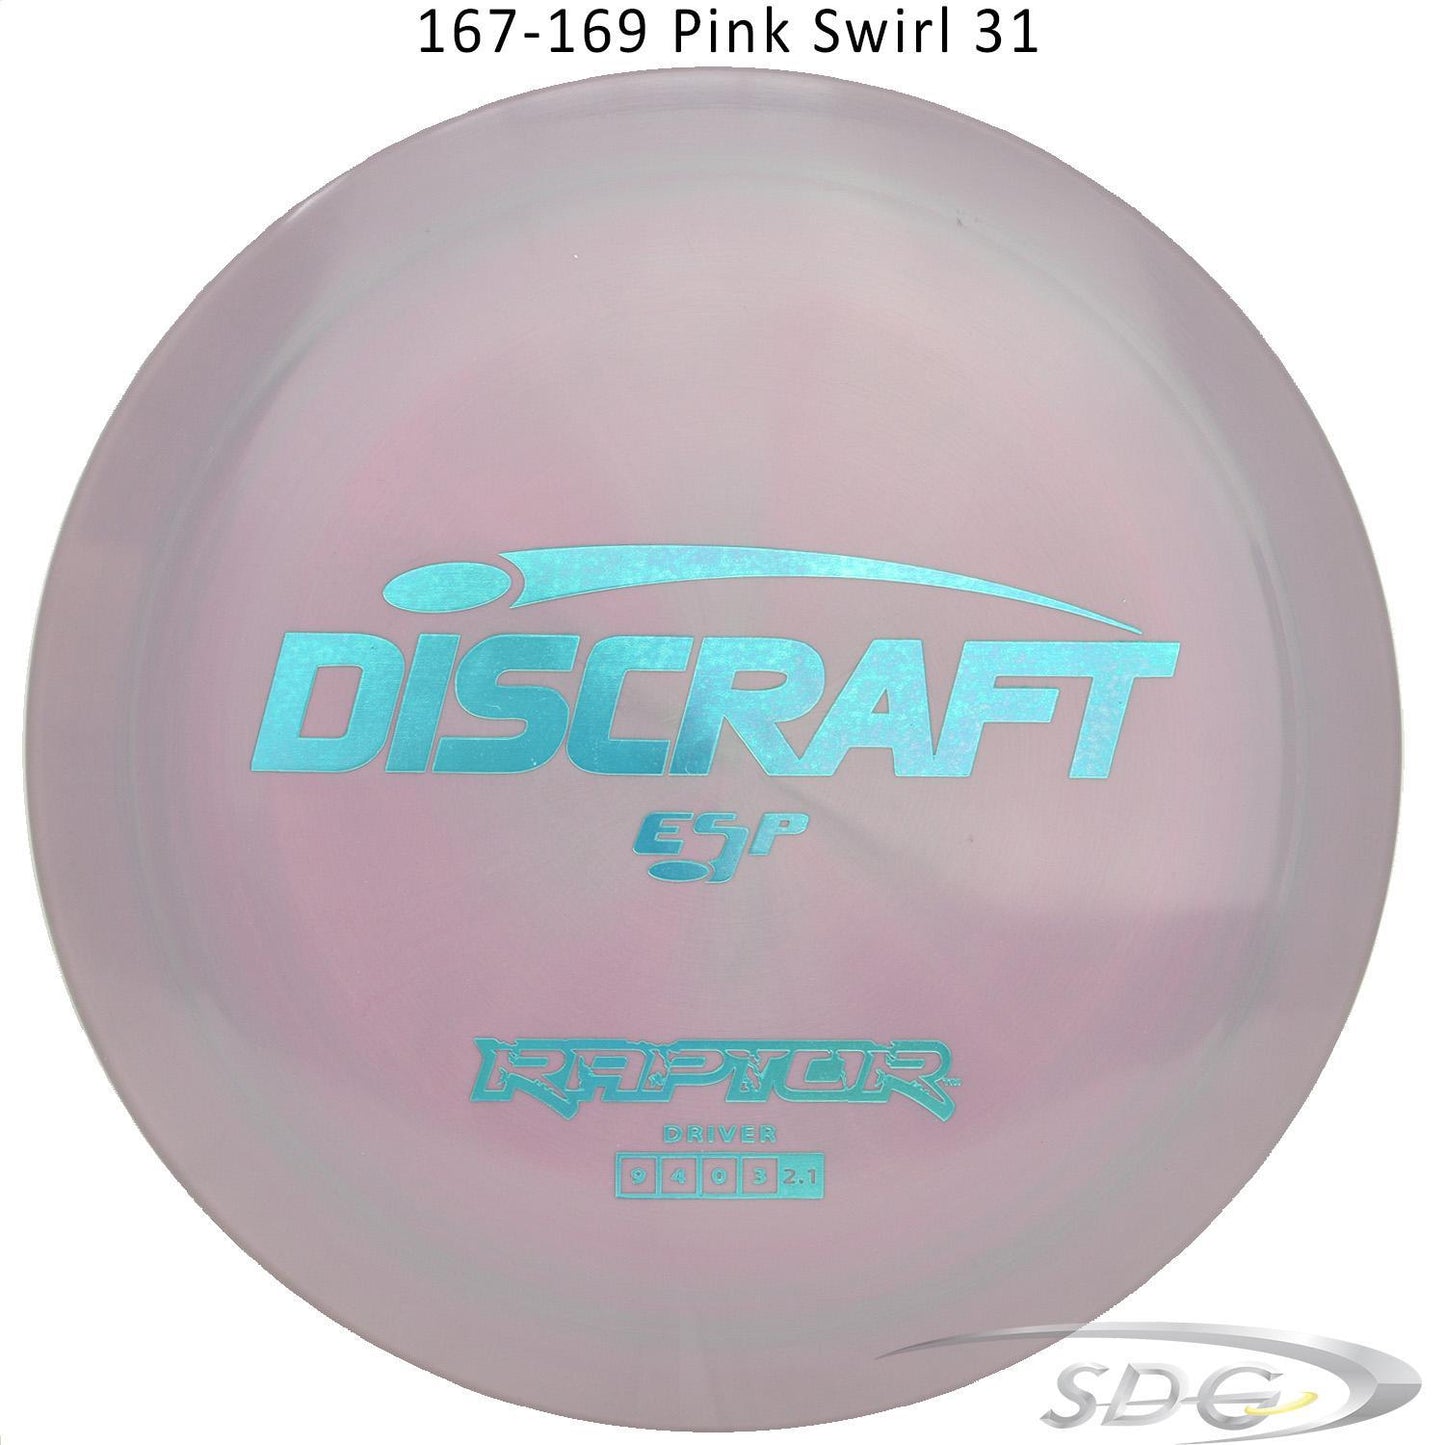 discraft-esp-raptor-disc-golf-distance-driver 167-169 Pink Swirl 31